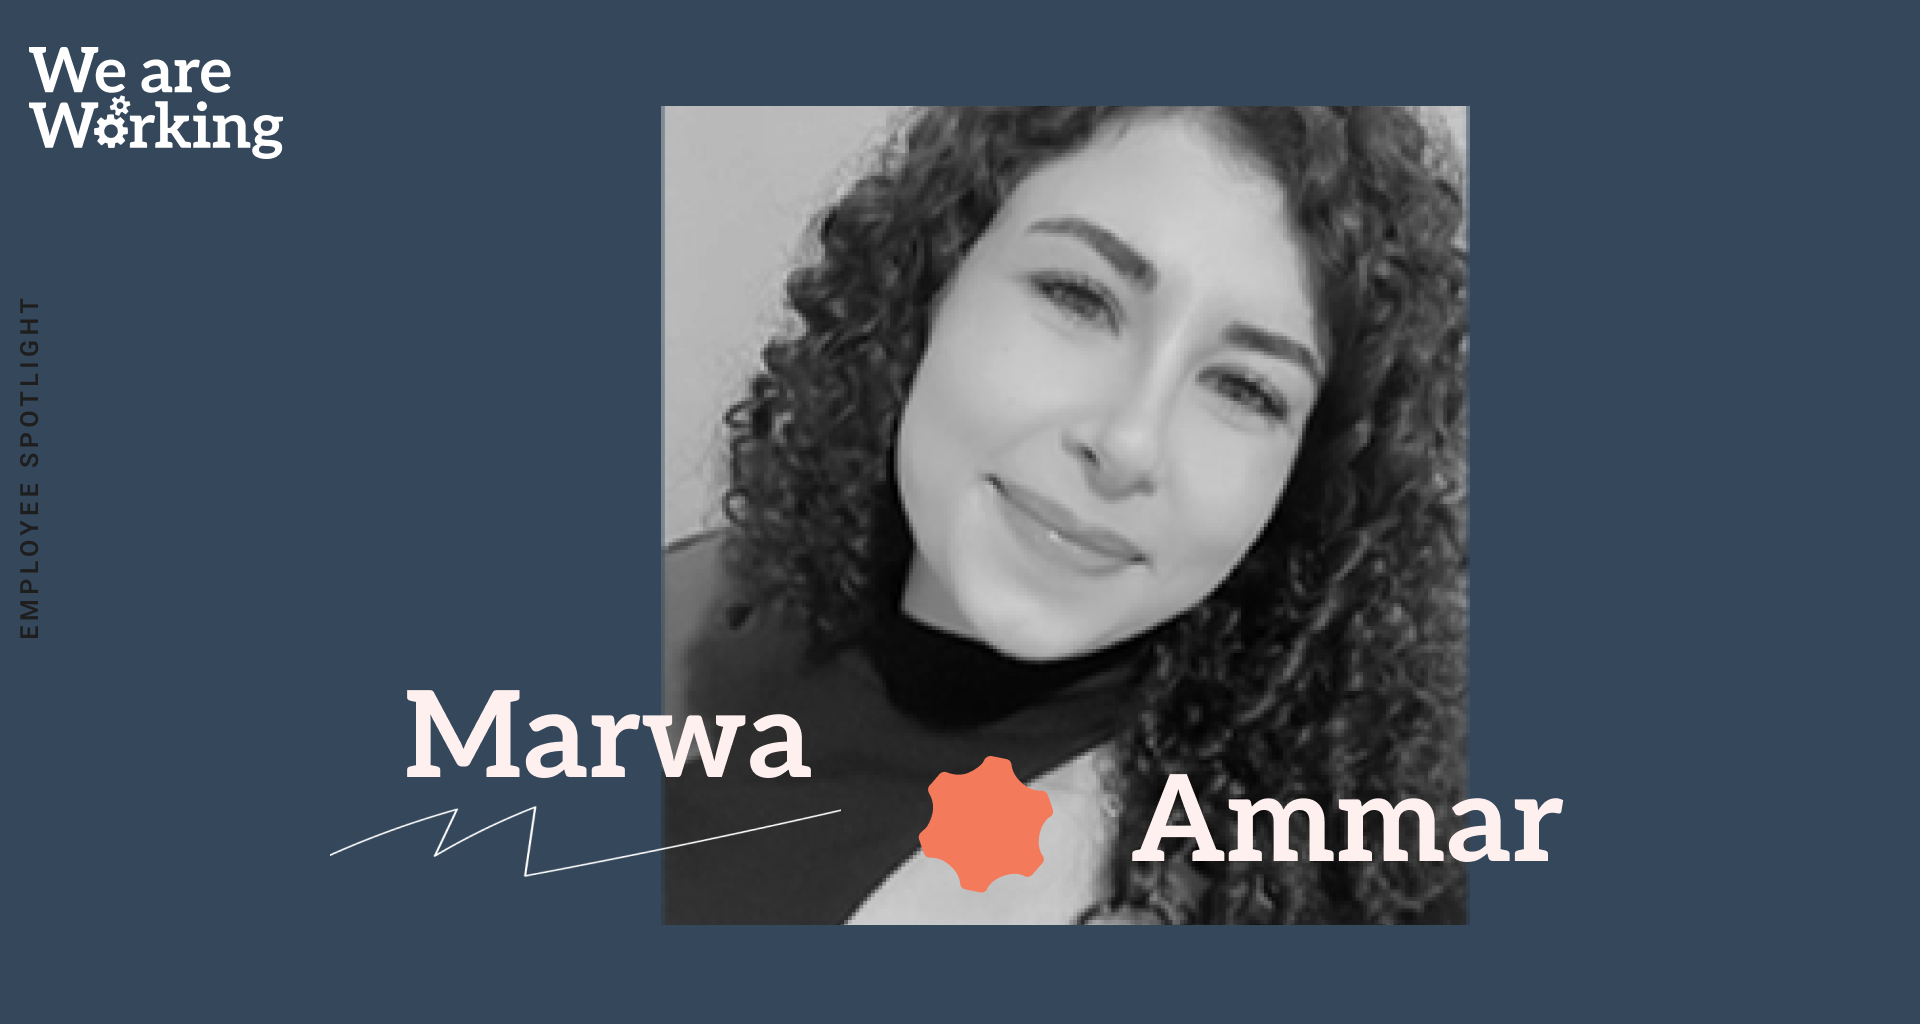 Marwa Ammar Employee Spotlight